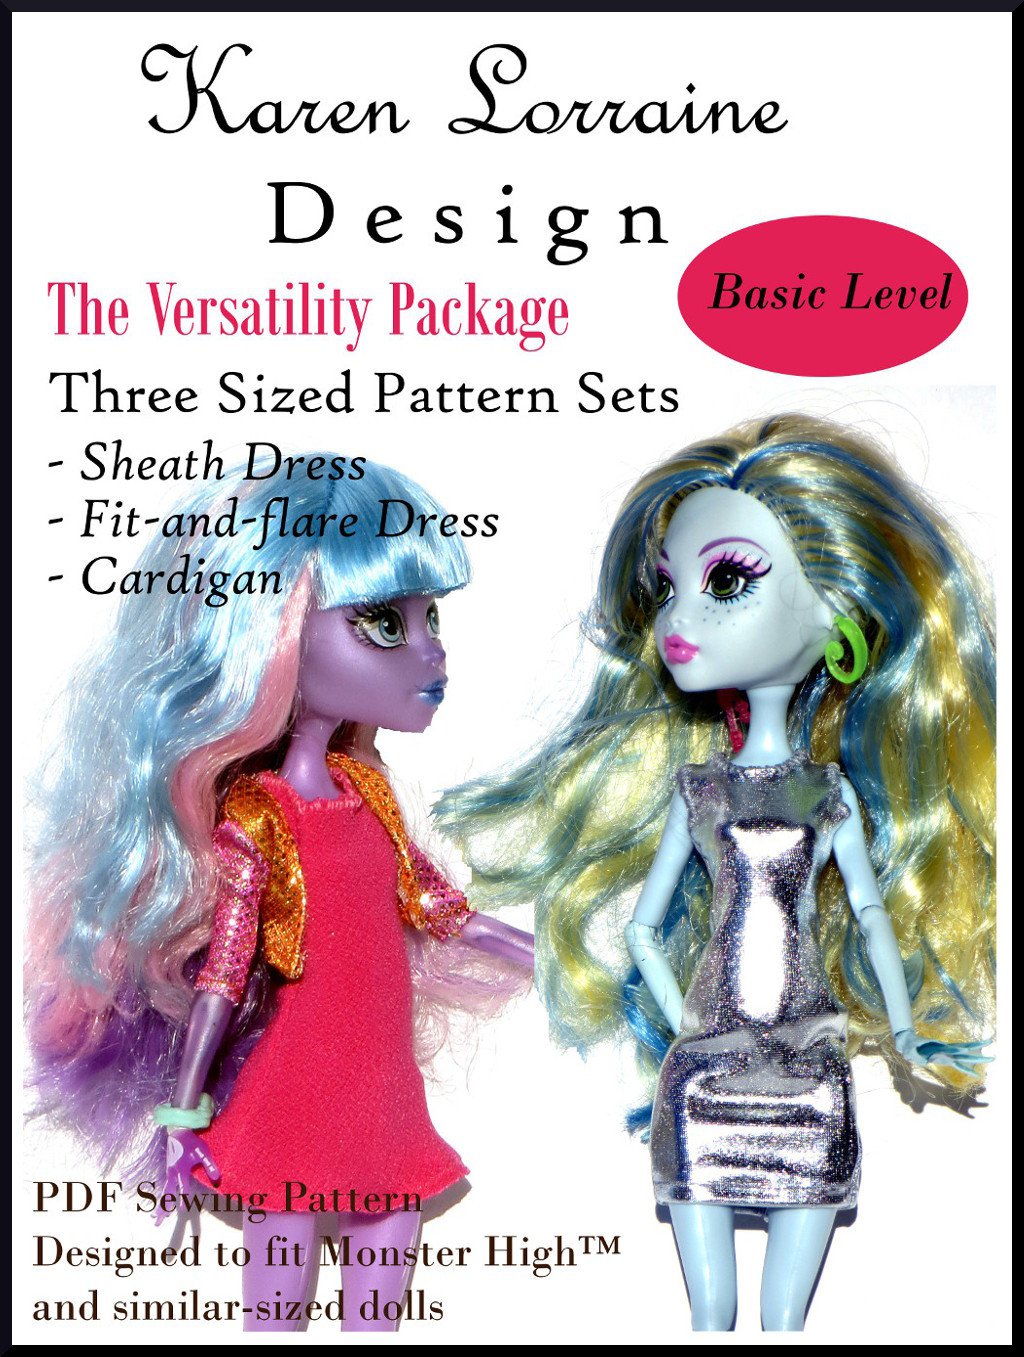 Monster High Dolls in Fashion Dolls 